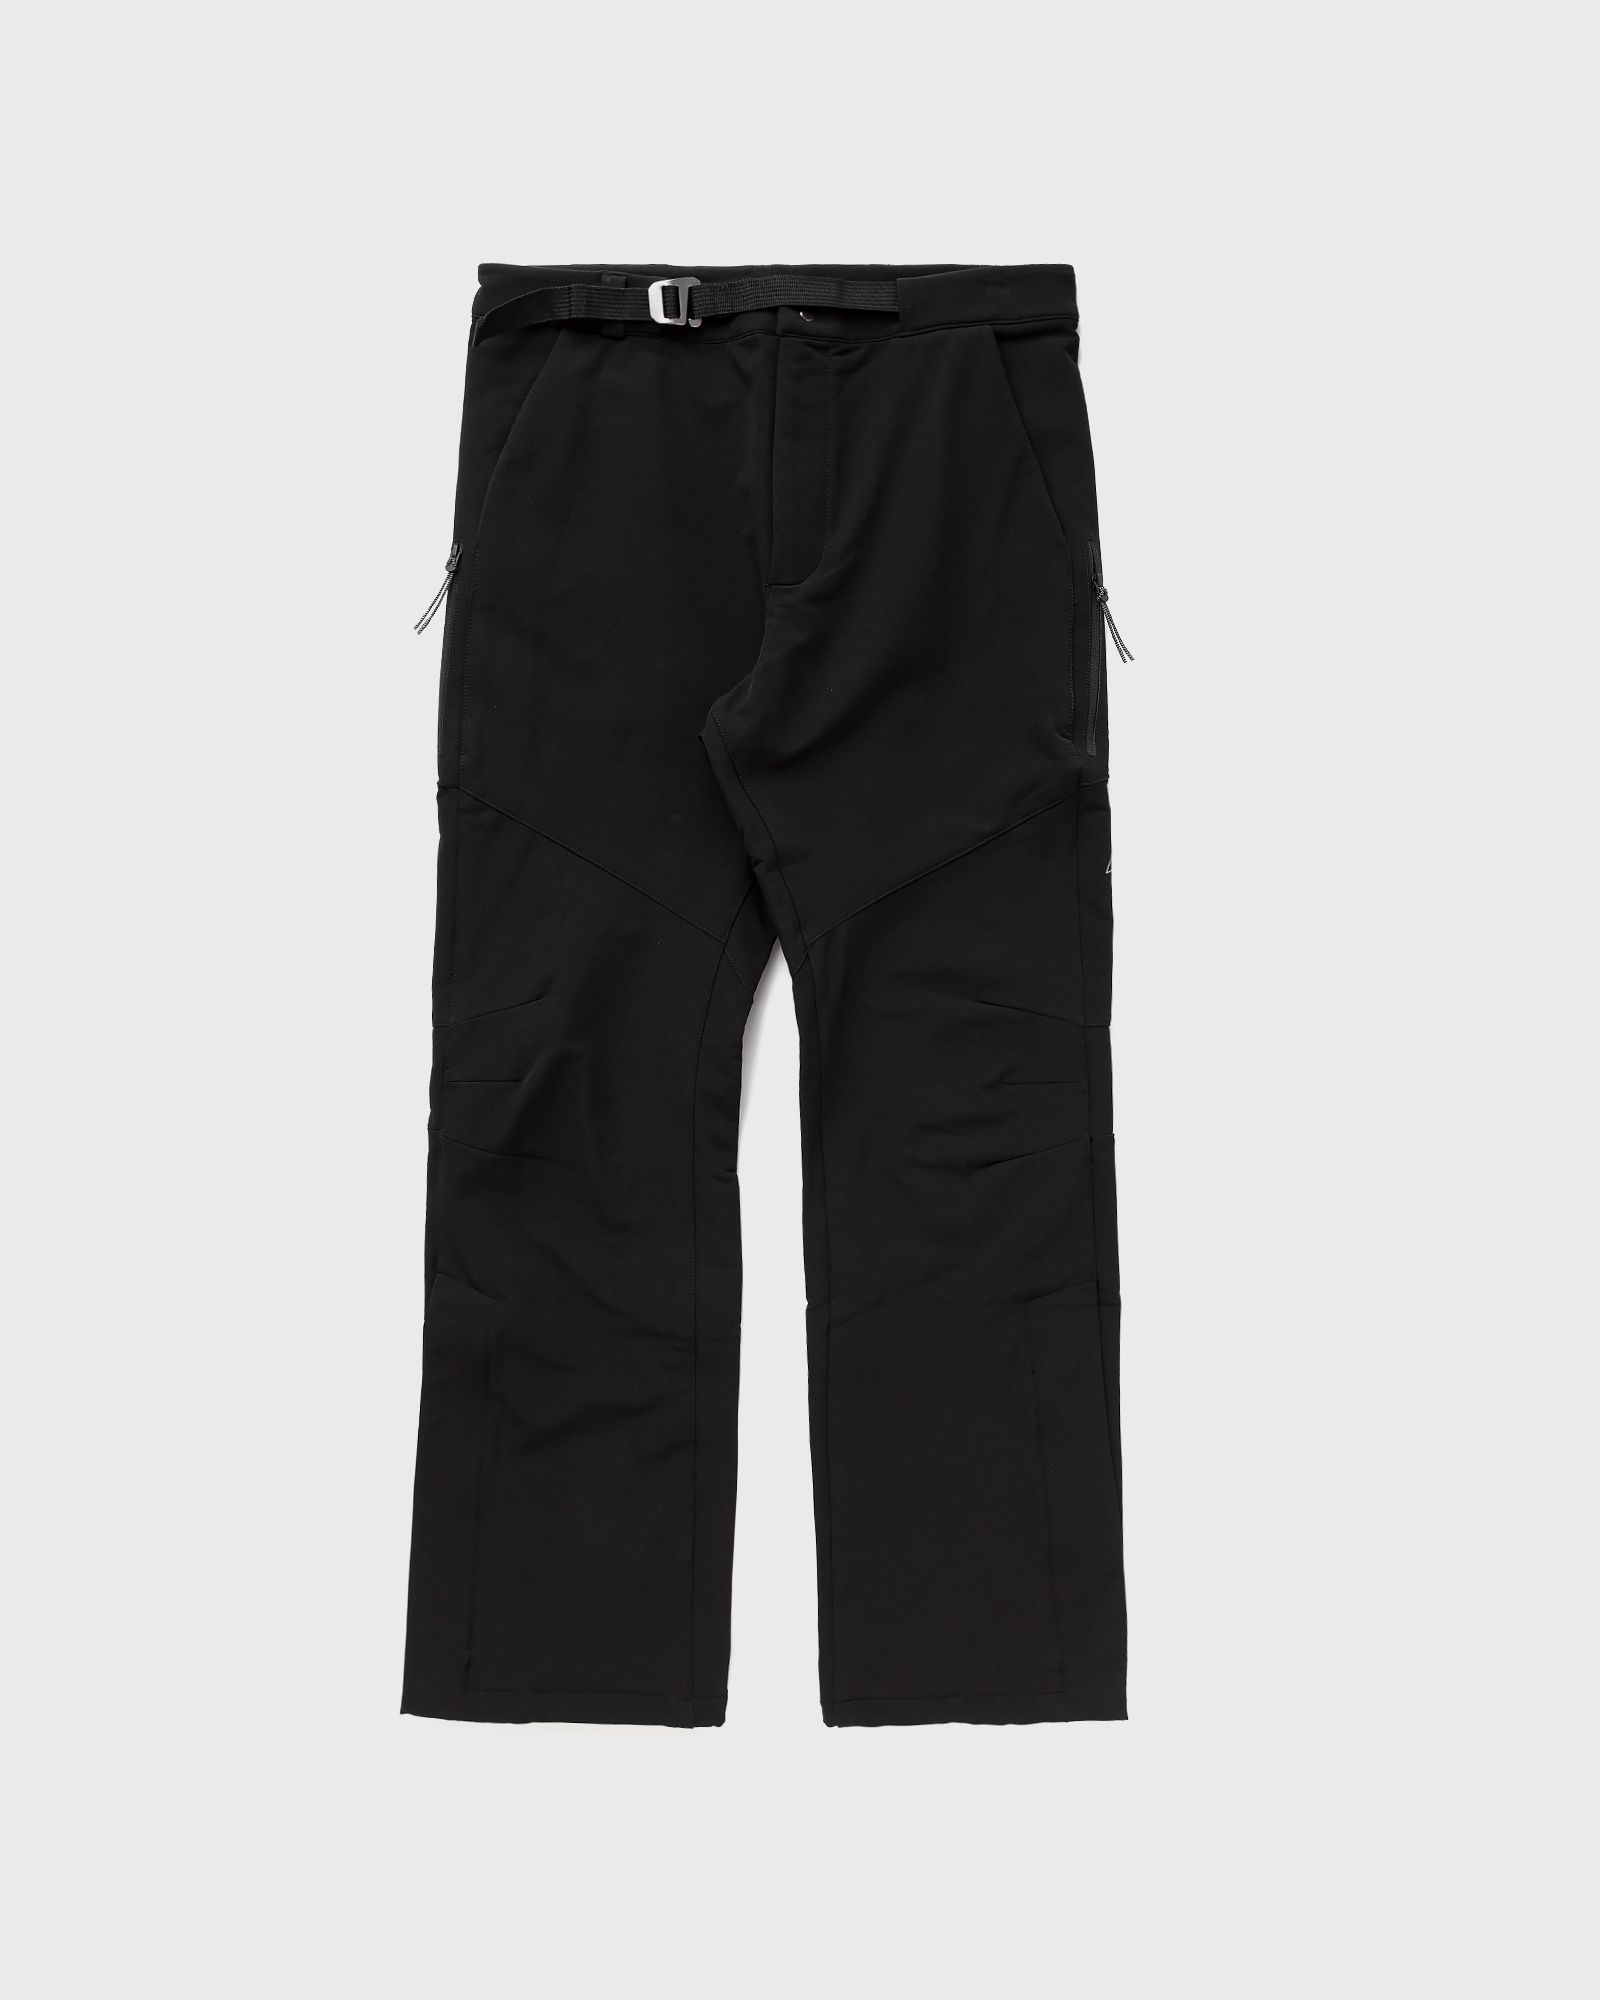 Roa - technical trousers softshell men casual pants black in größe:s